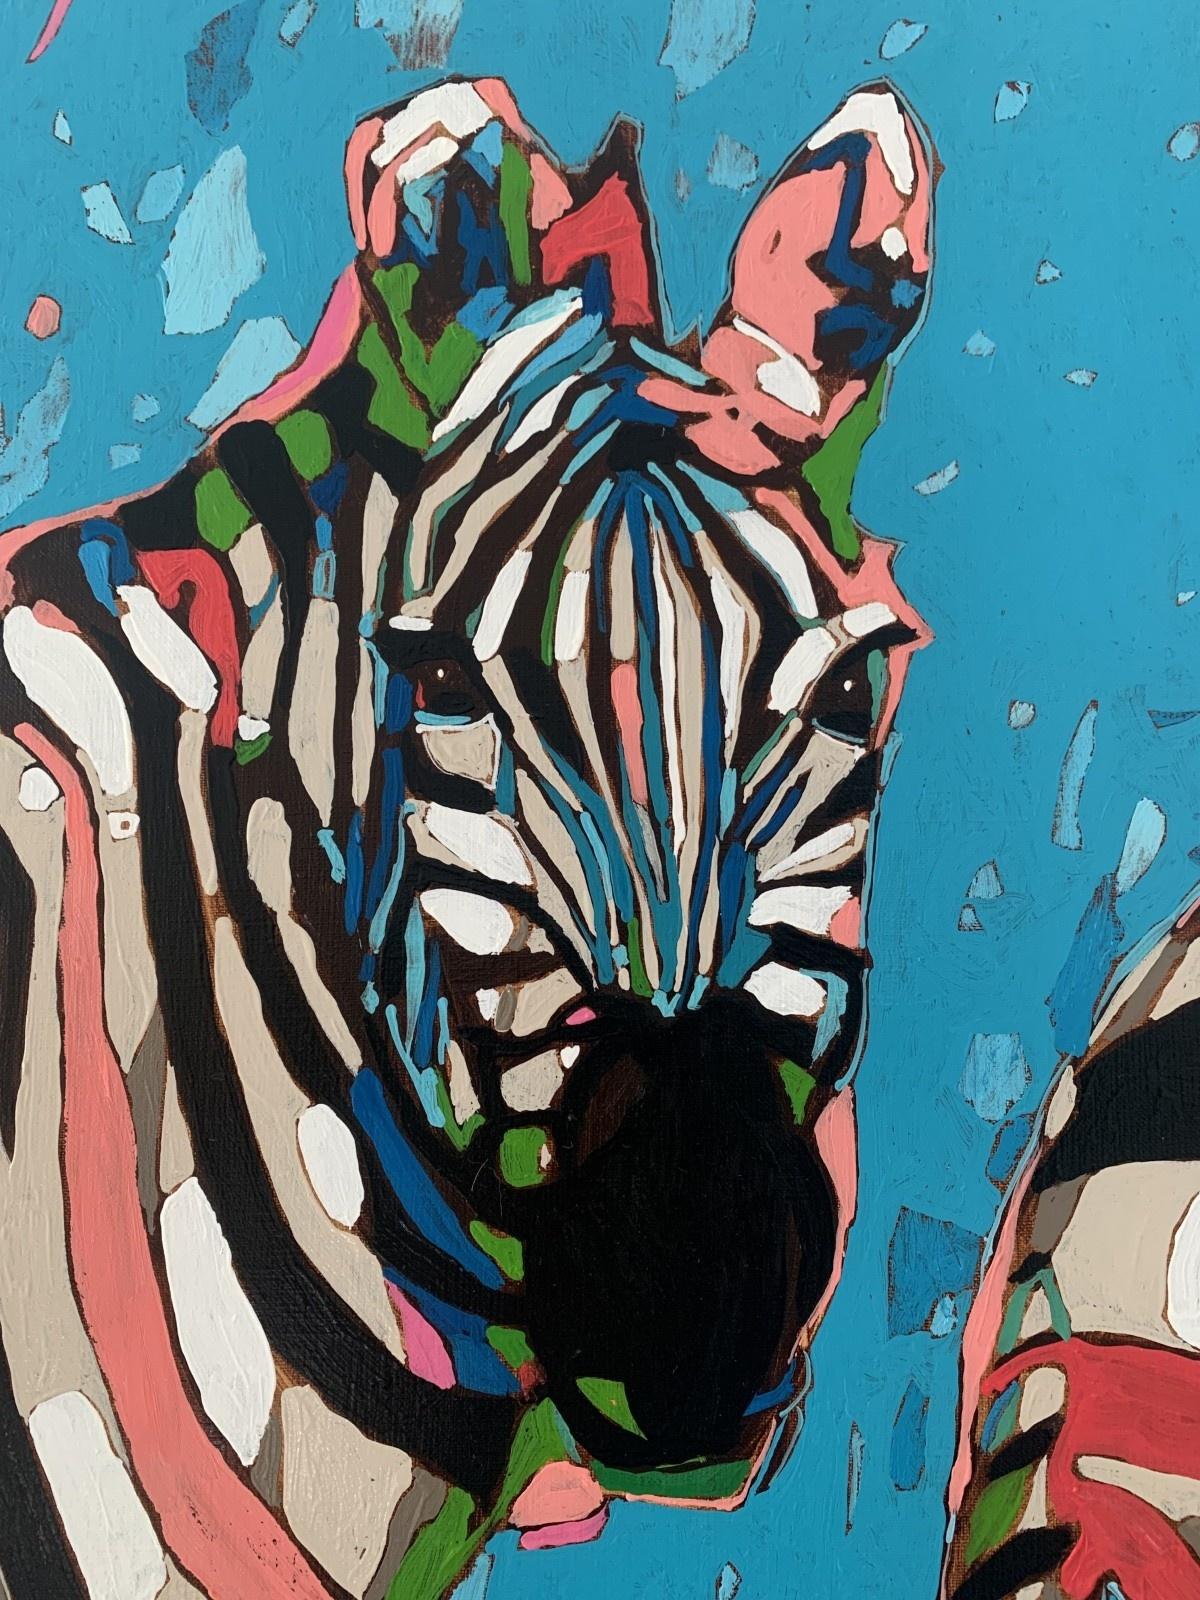 Zebras - Contemporary Figurative Oil Painting, Pop art, Animals, Polish artist - Blue Animal Painting by Rafał Gadowski